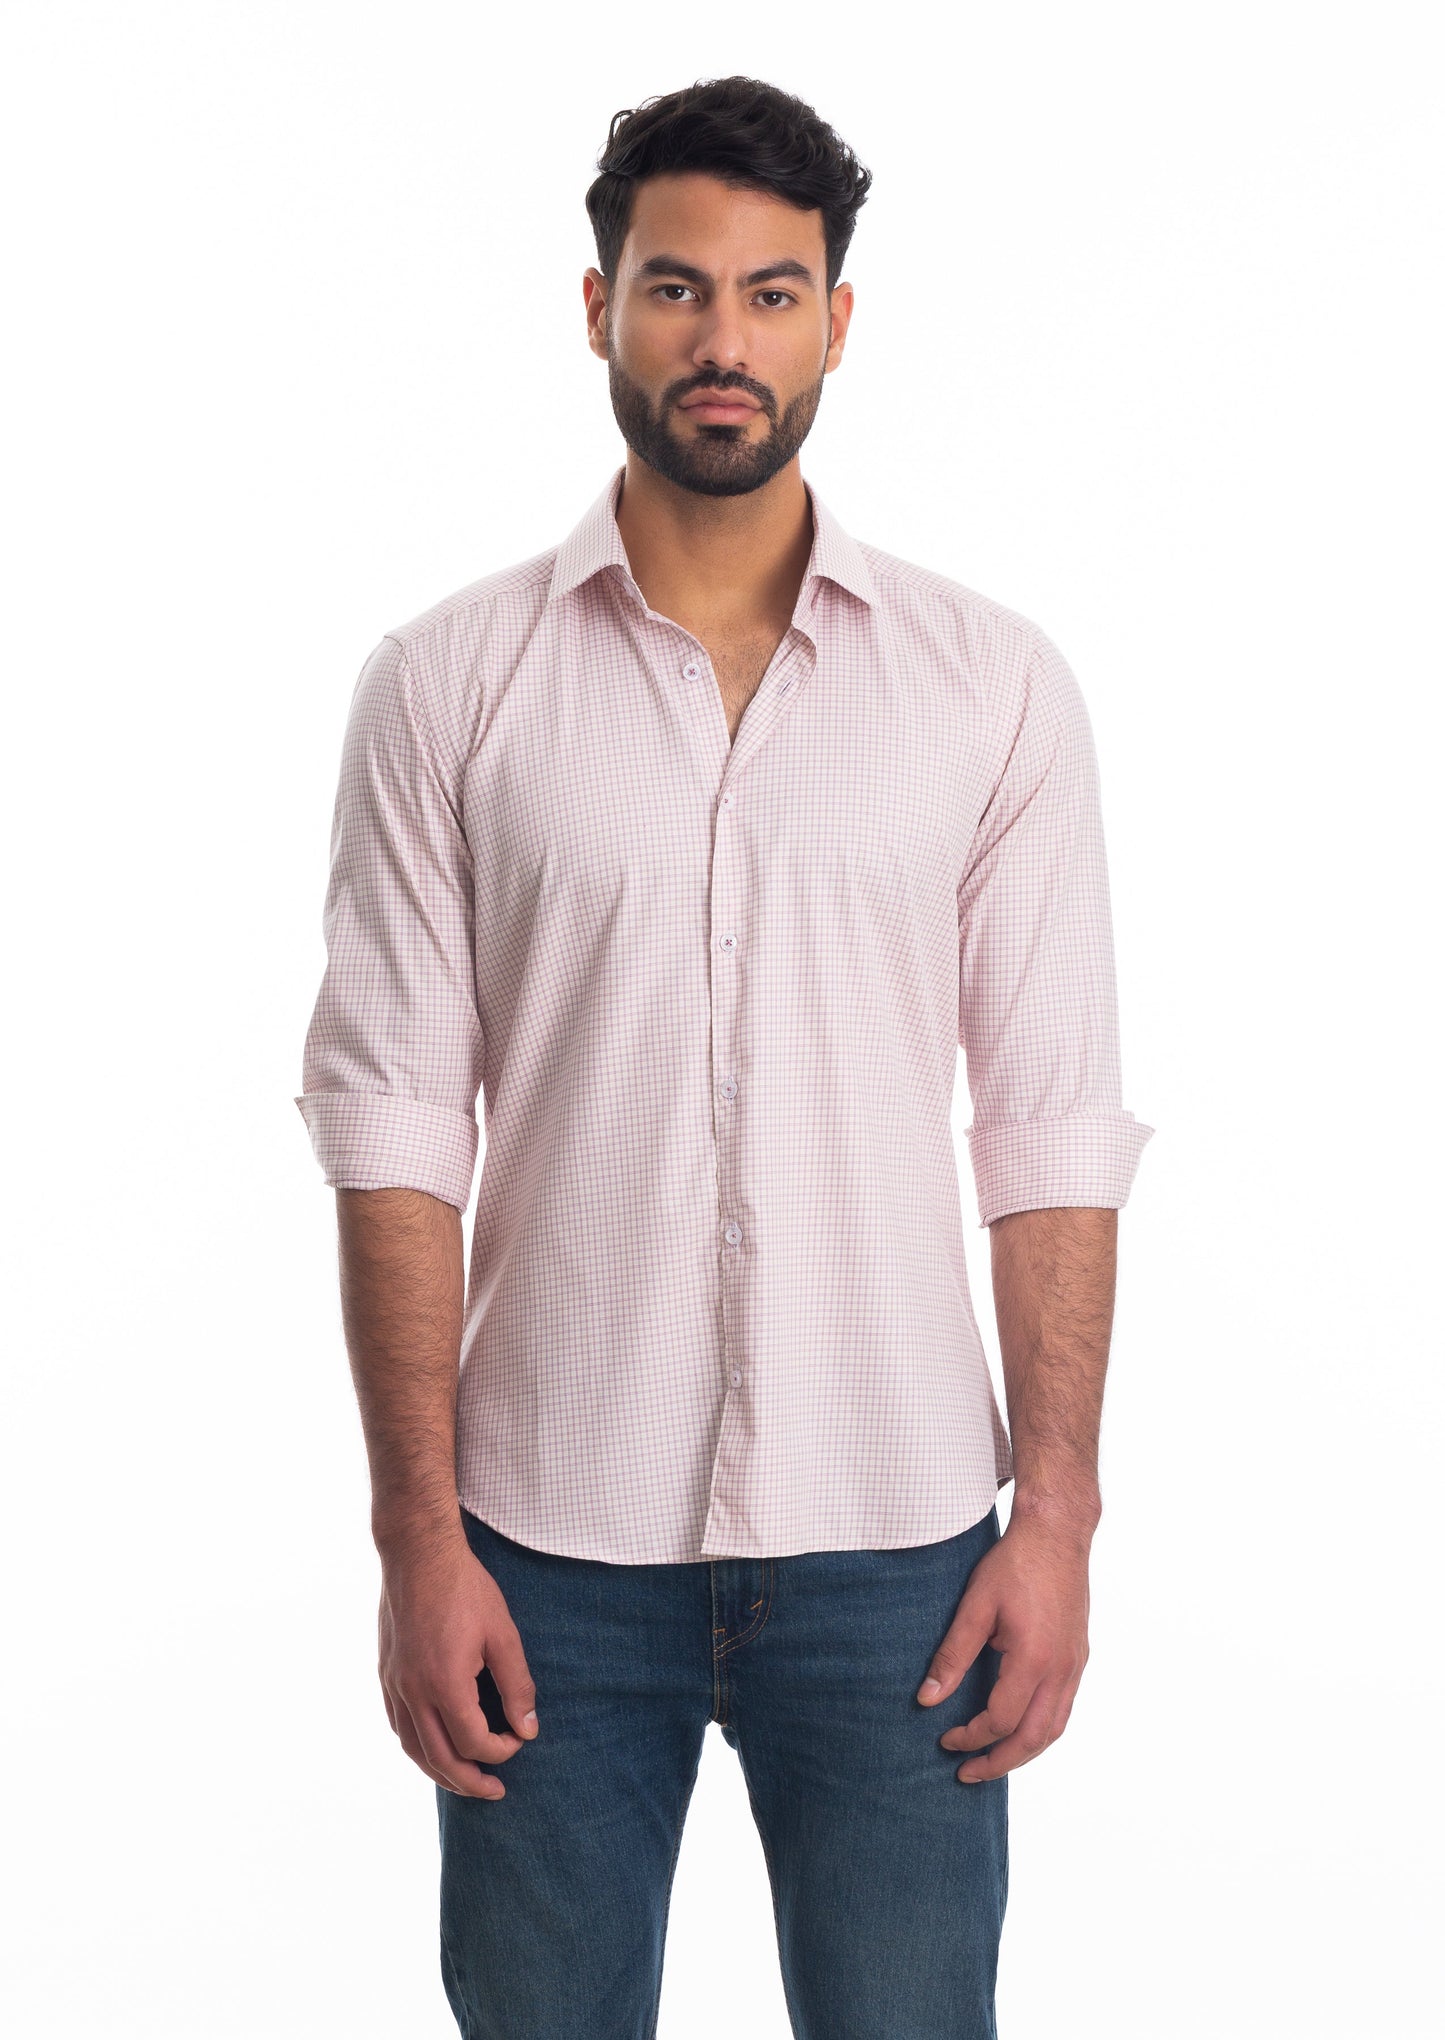 White + Light Pink Long Sleeve Shirt T-6808 Front